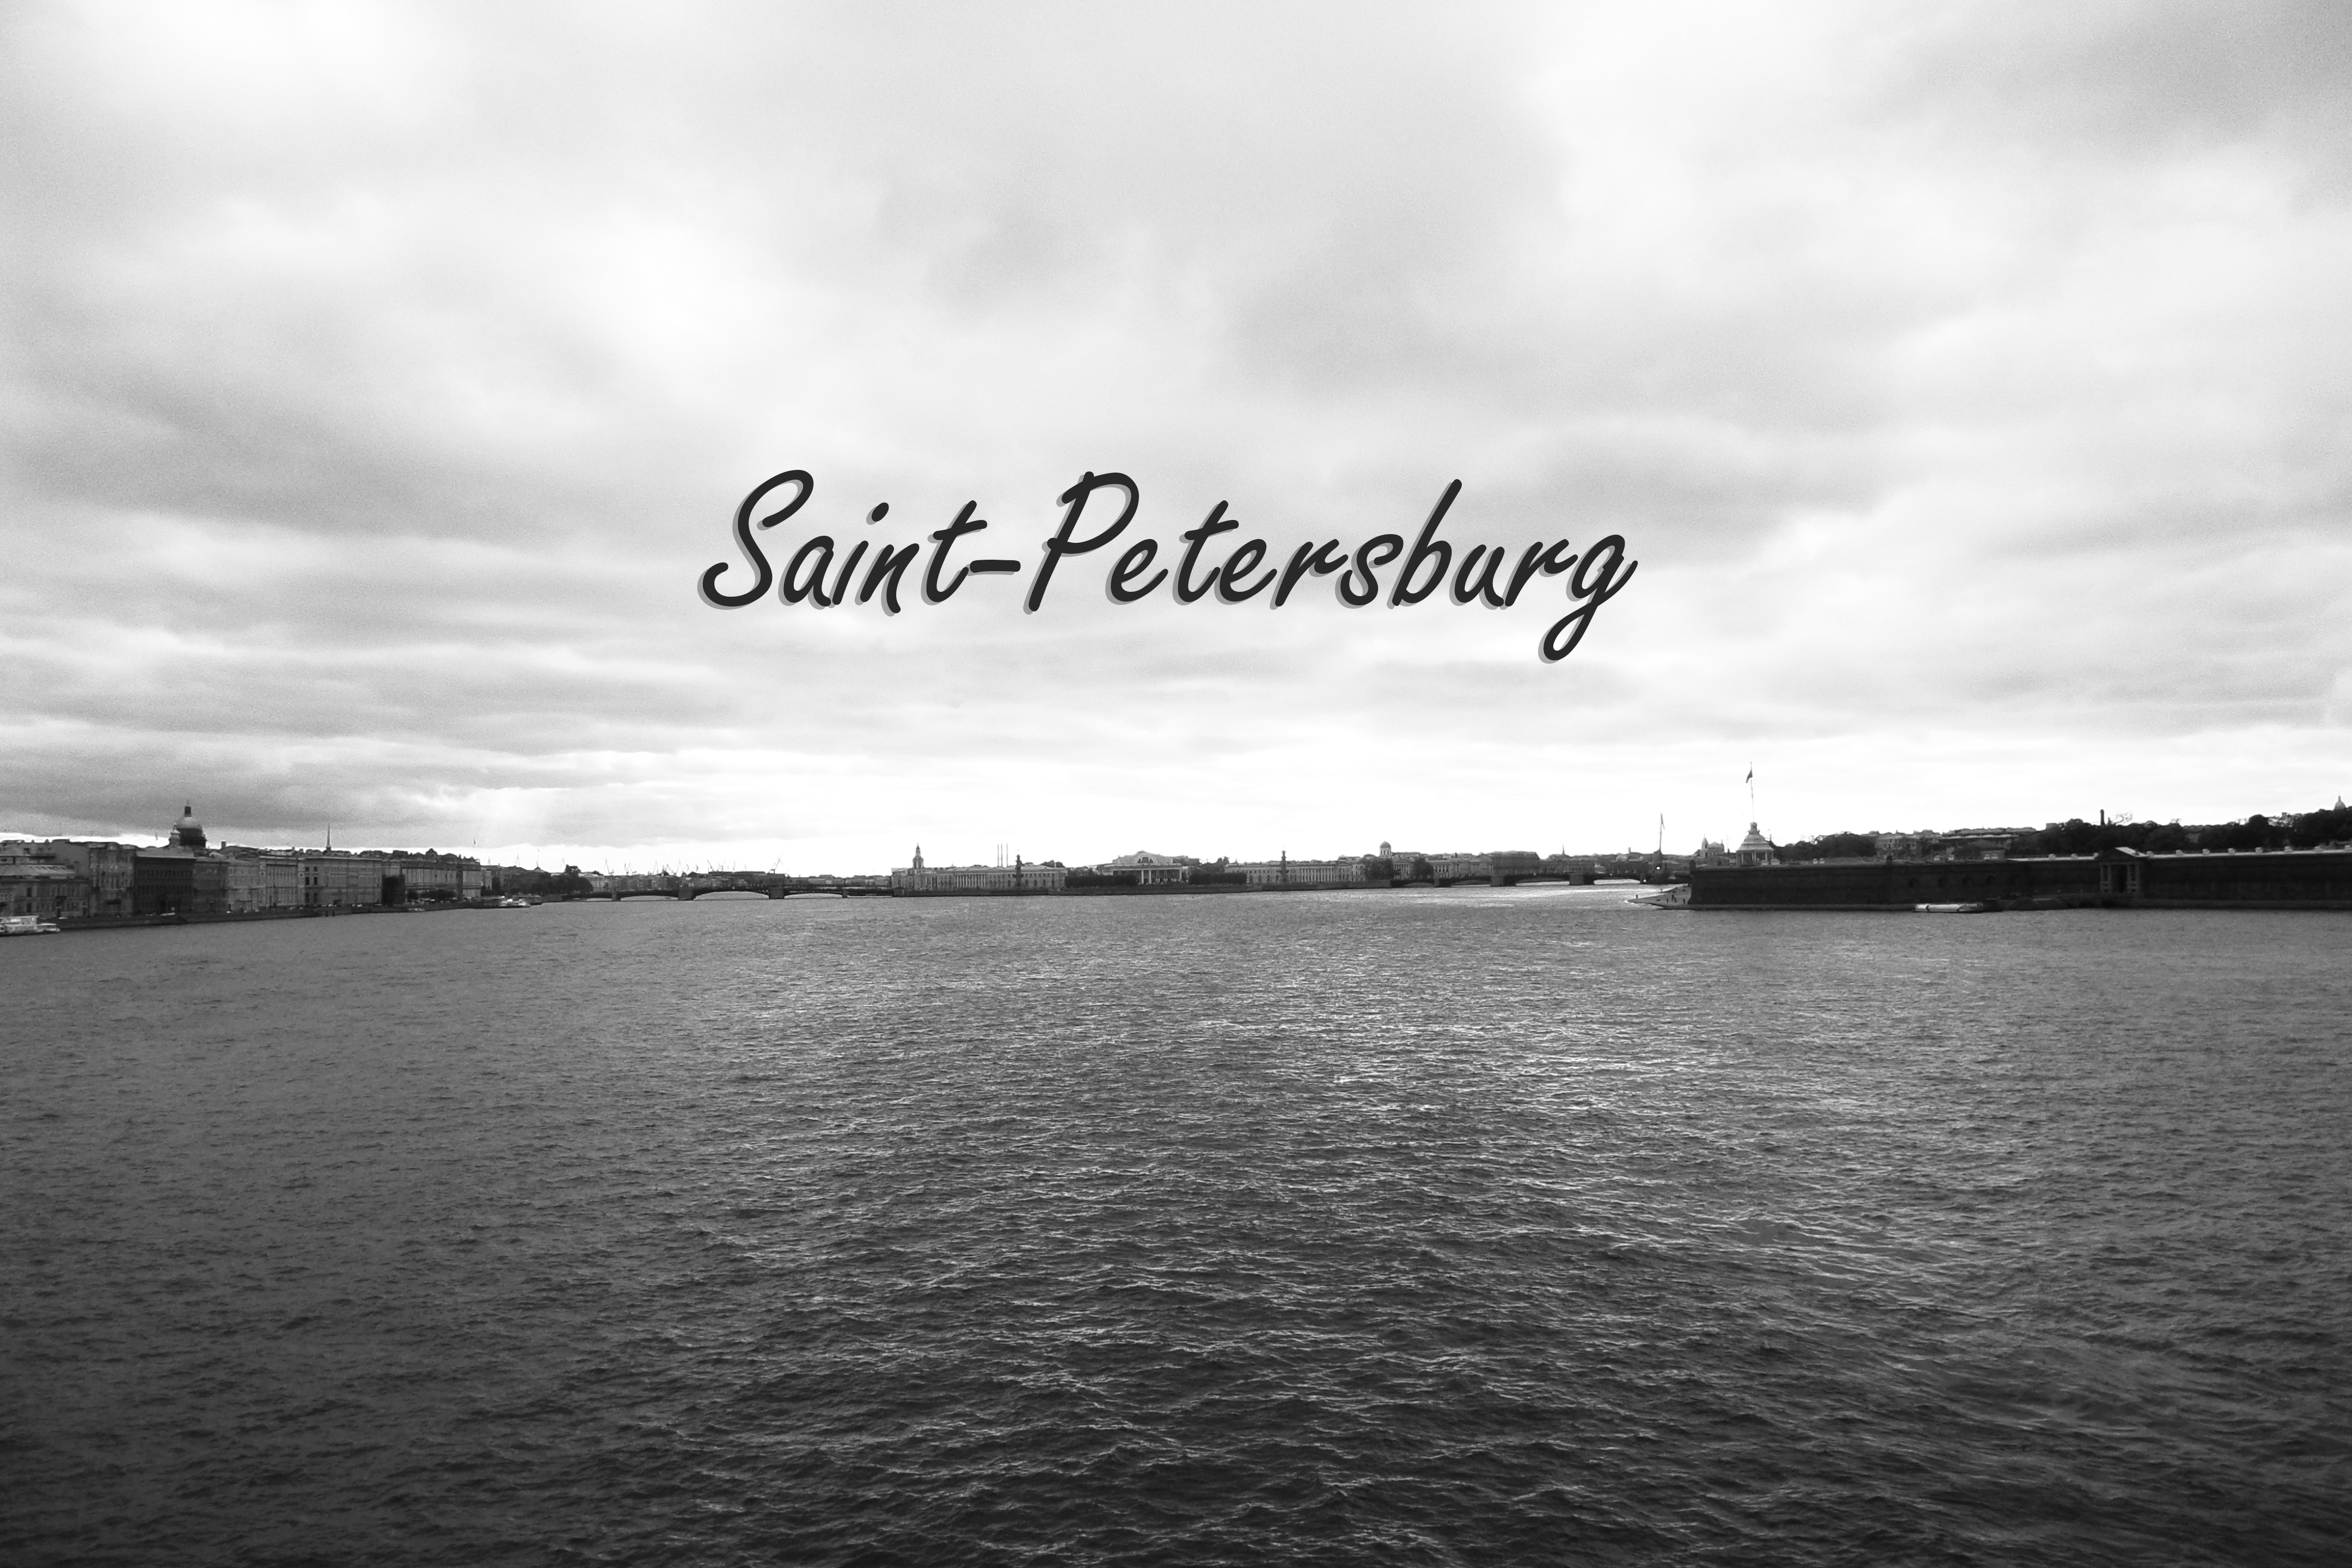 Санкт-Петербург надпись